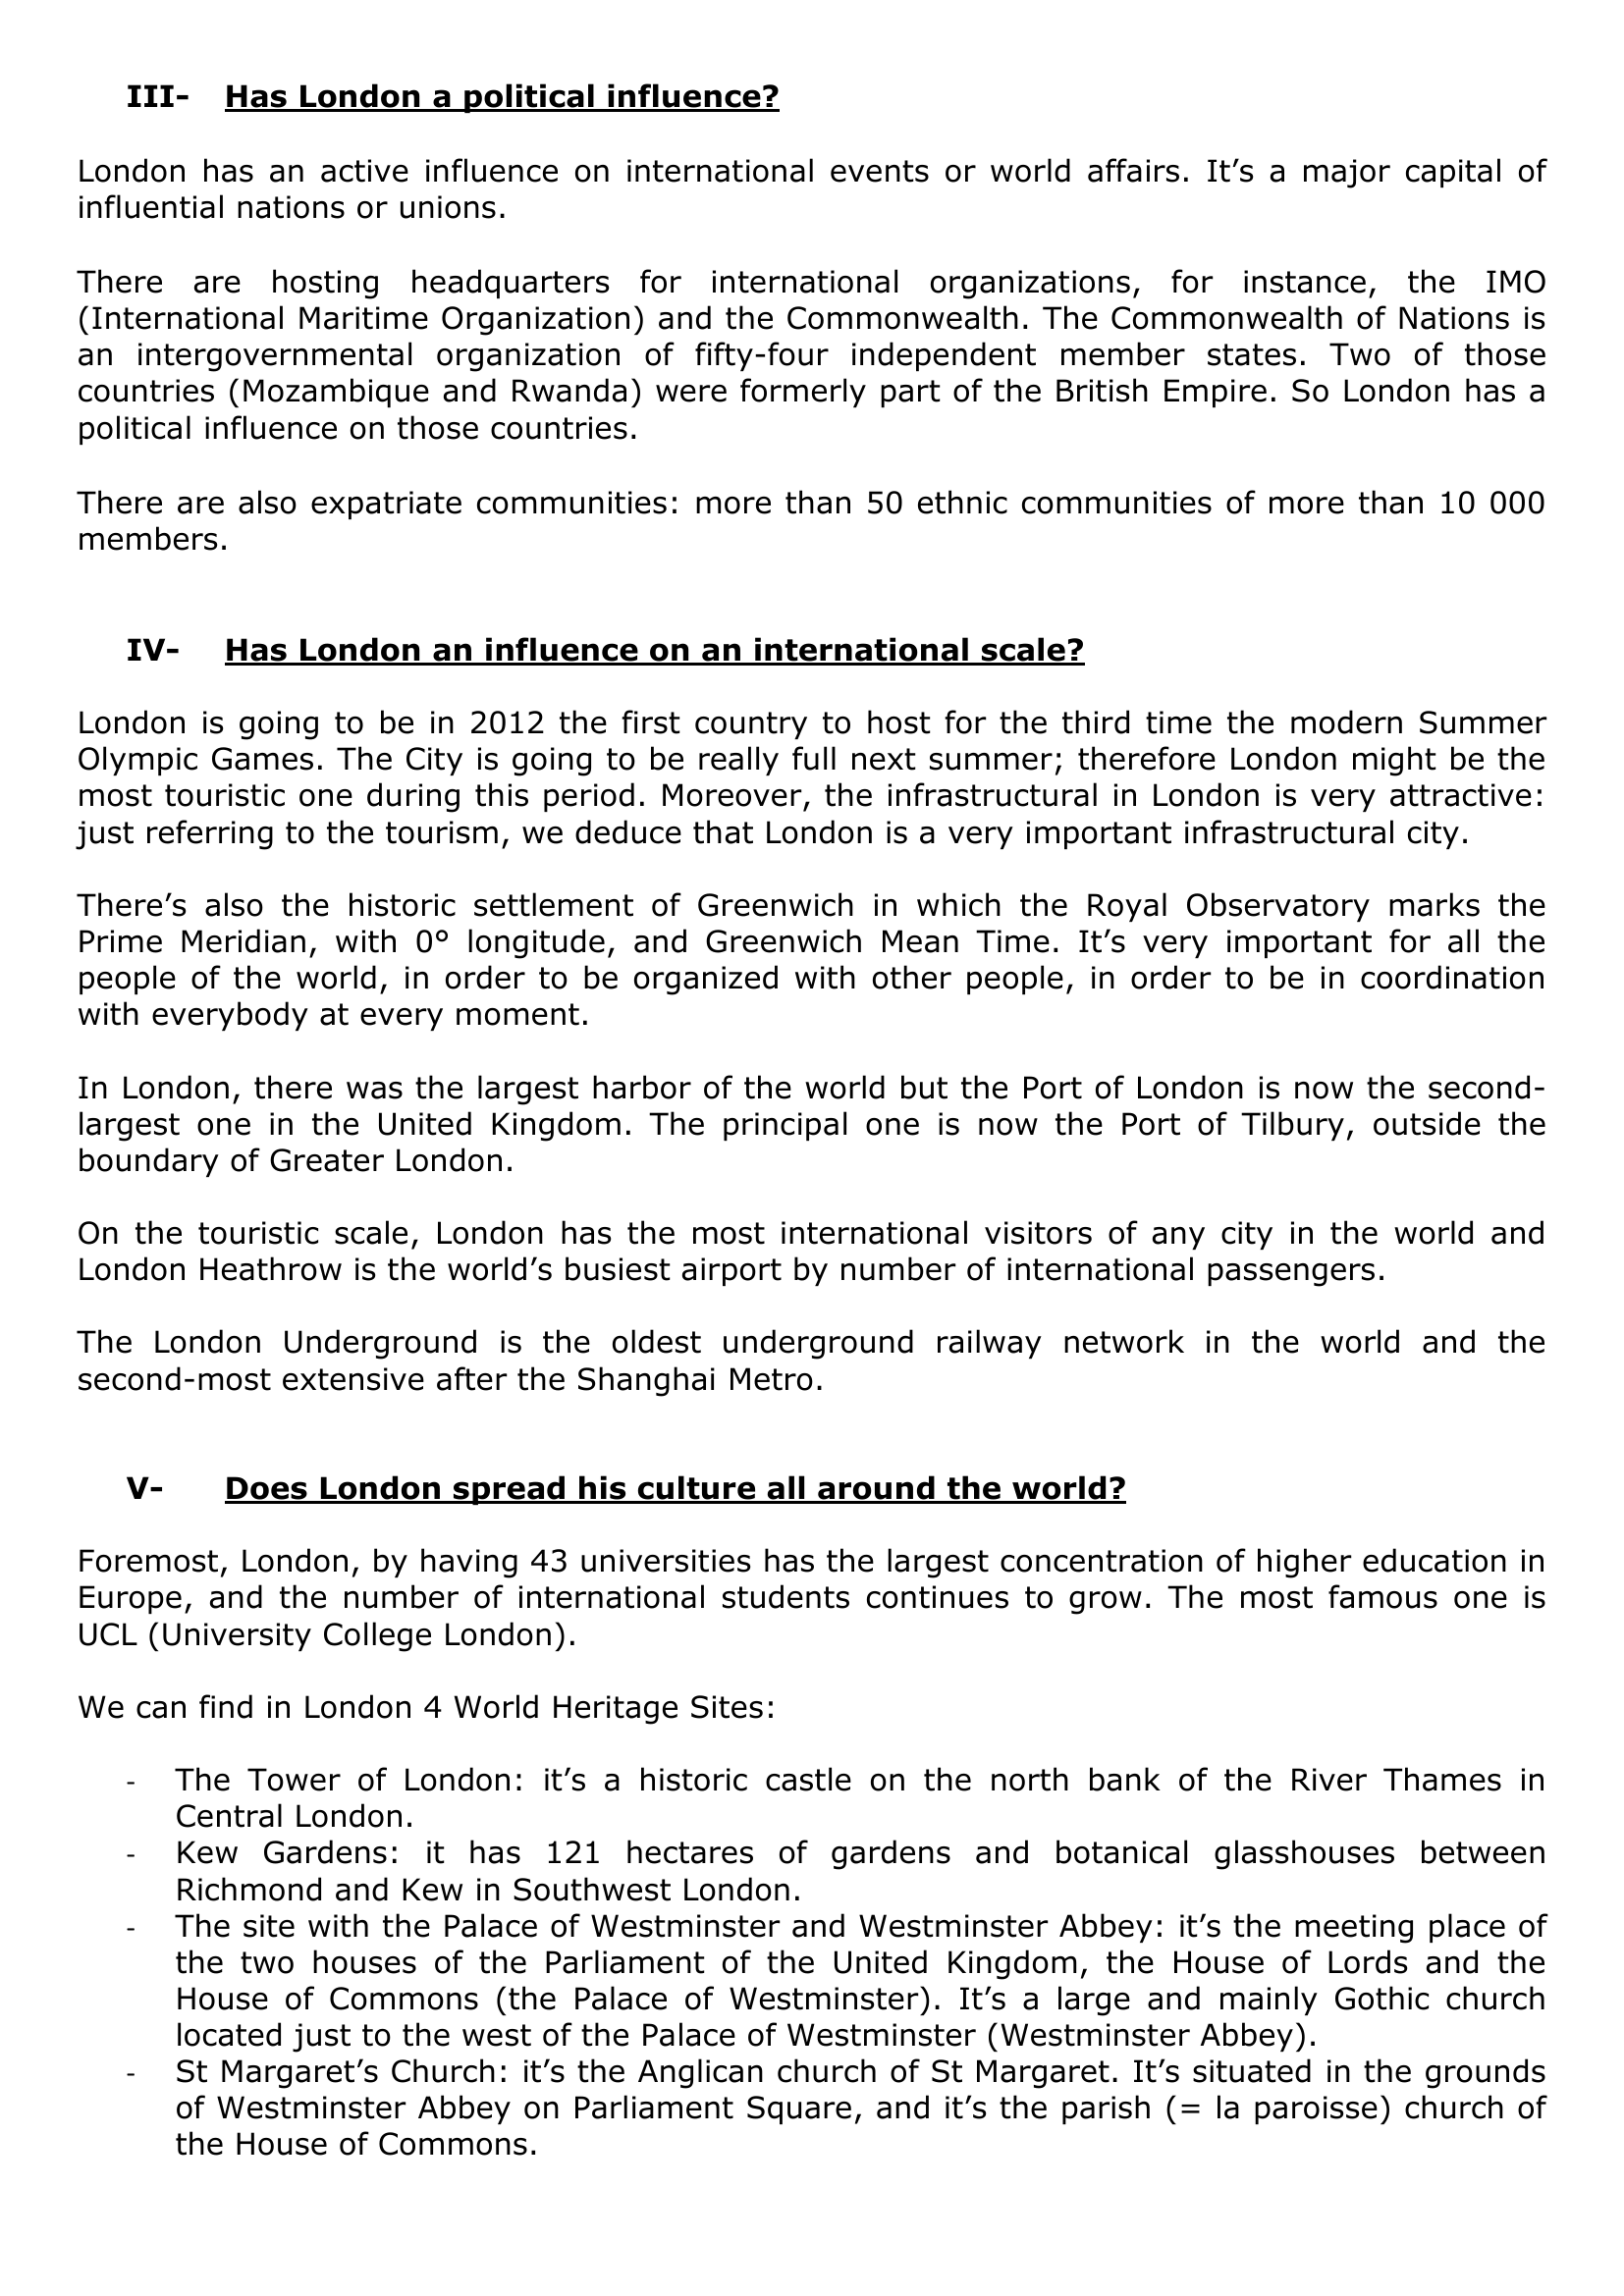 Prévisualisation du document A GLOBAL CITY: LONDON